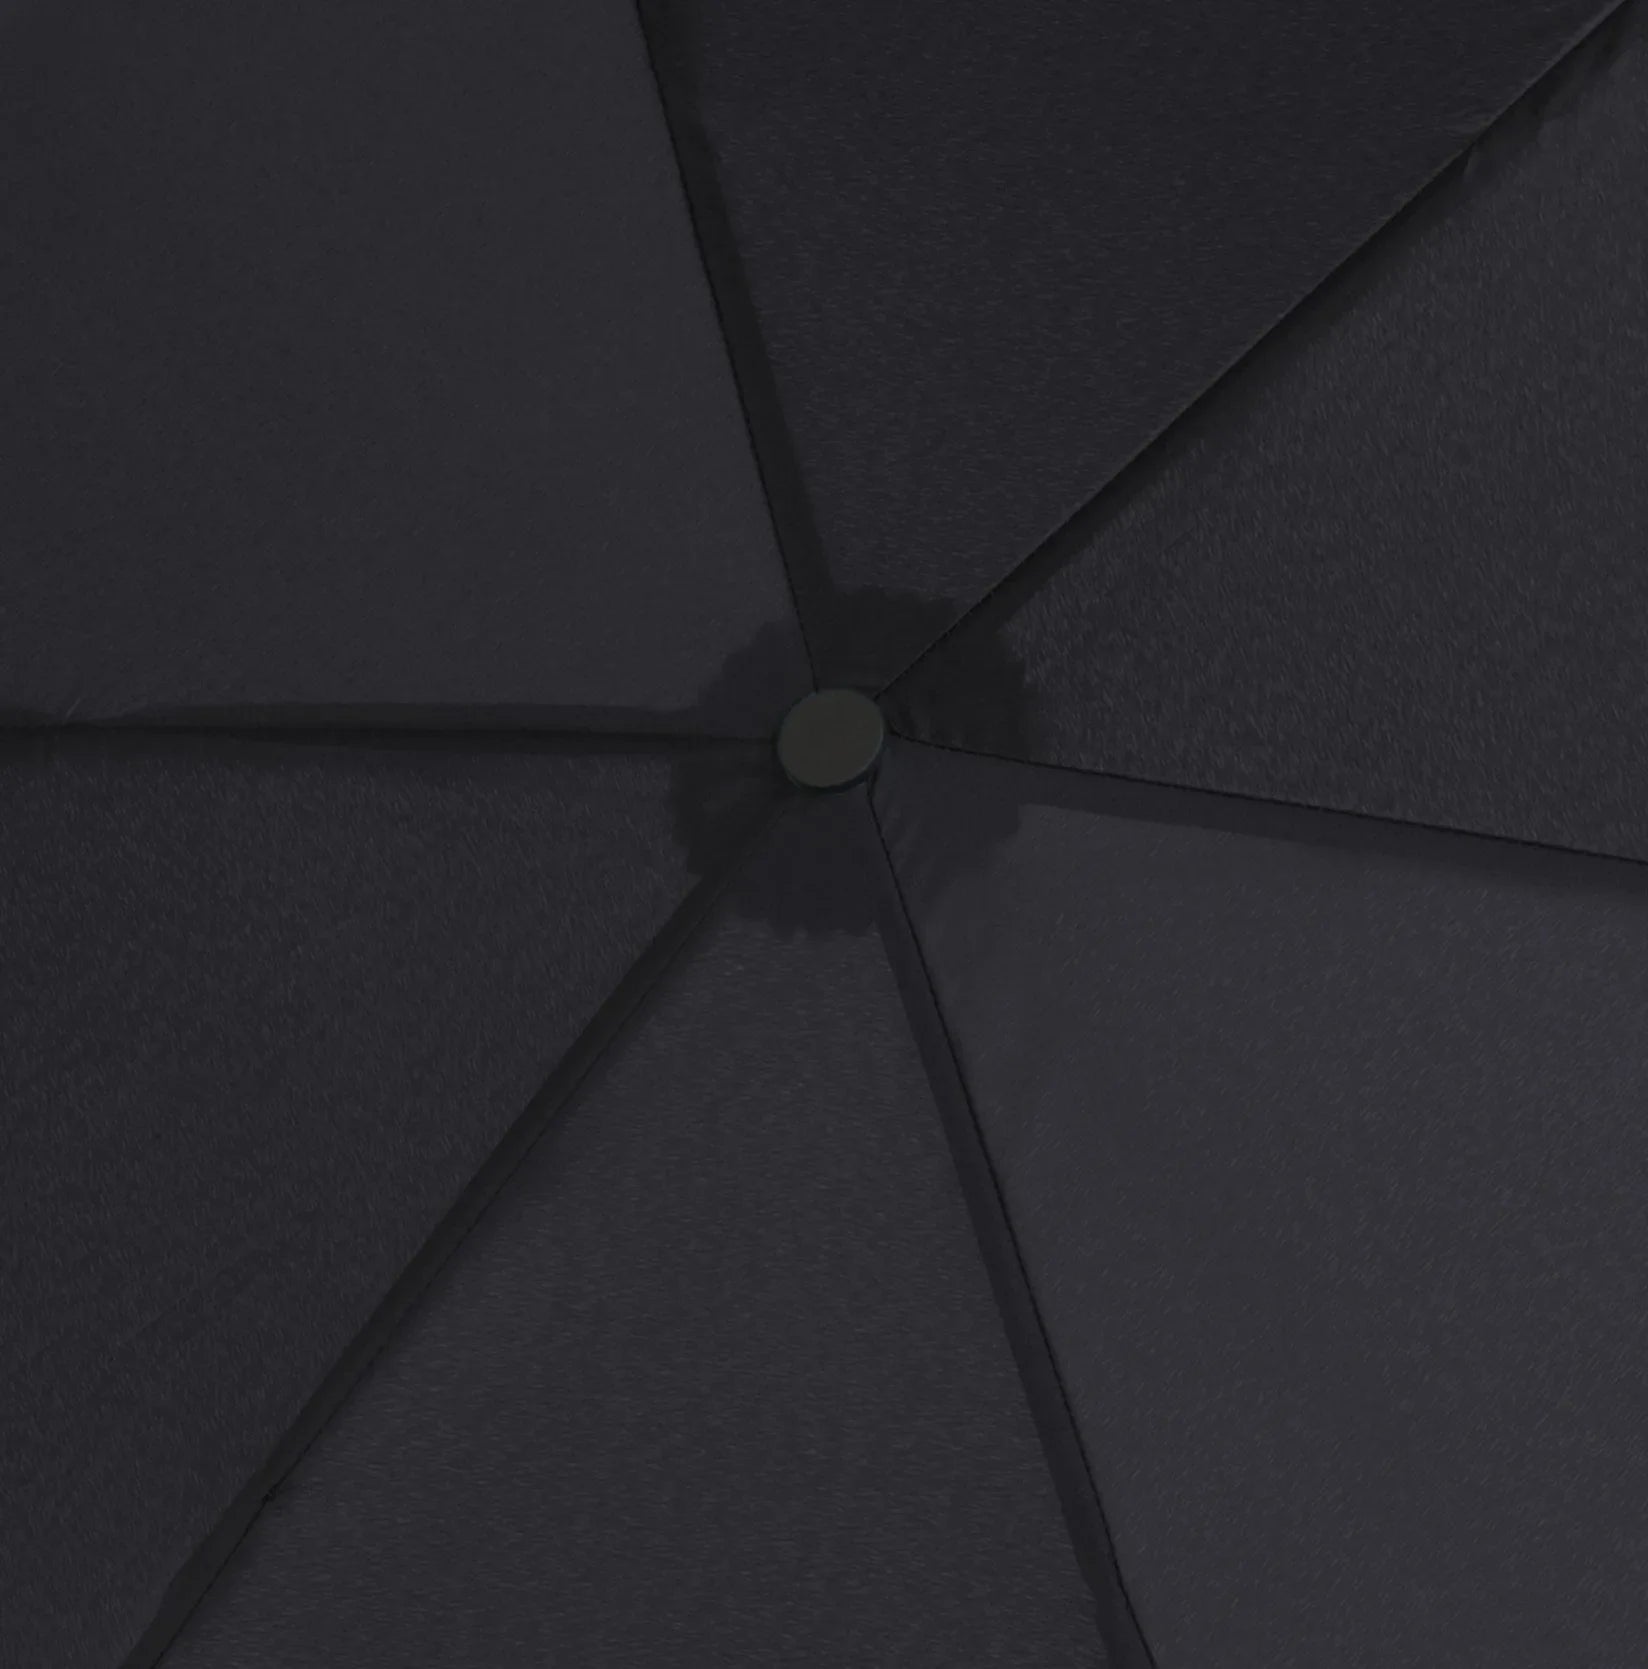 Parapluies pliants Doppler Zero Magic - beige harmonique